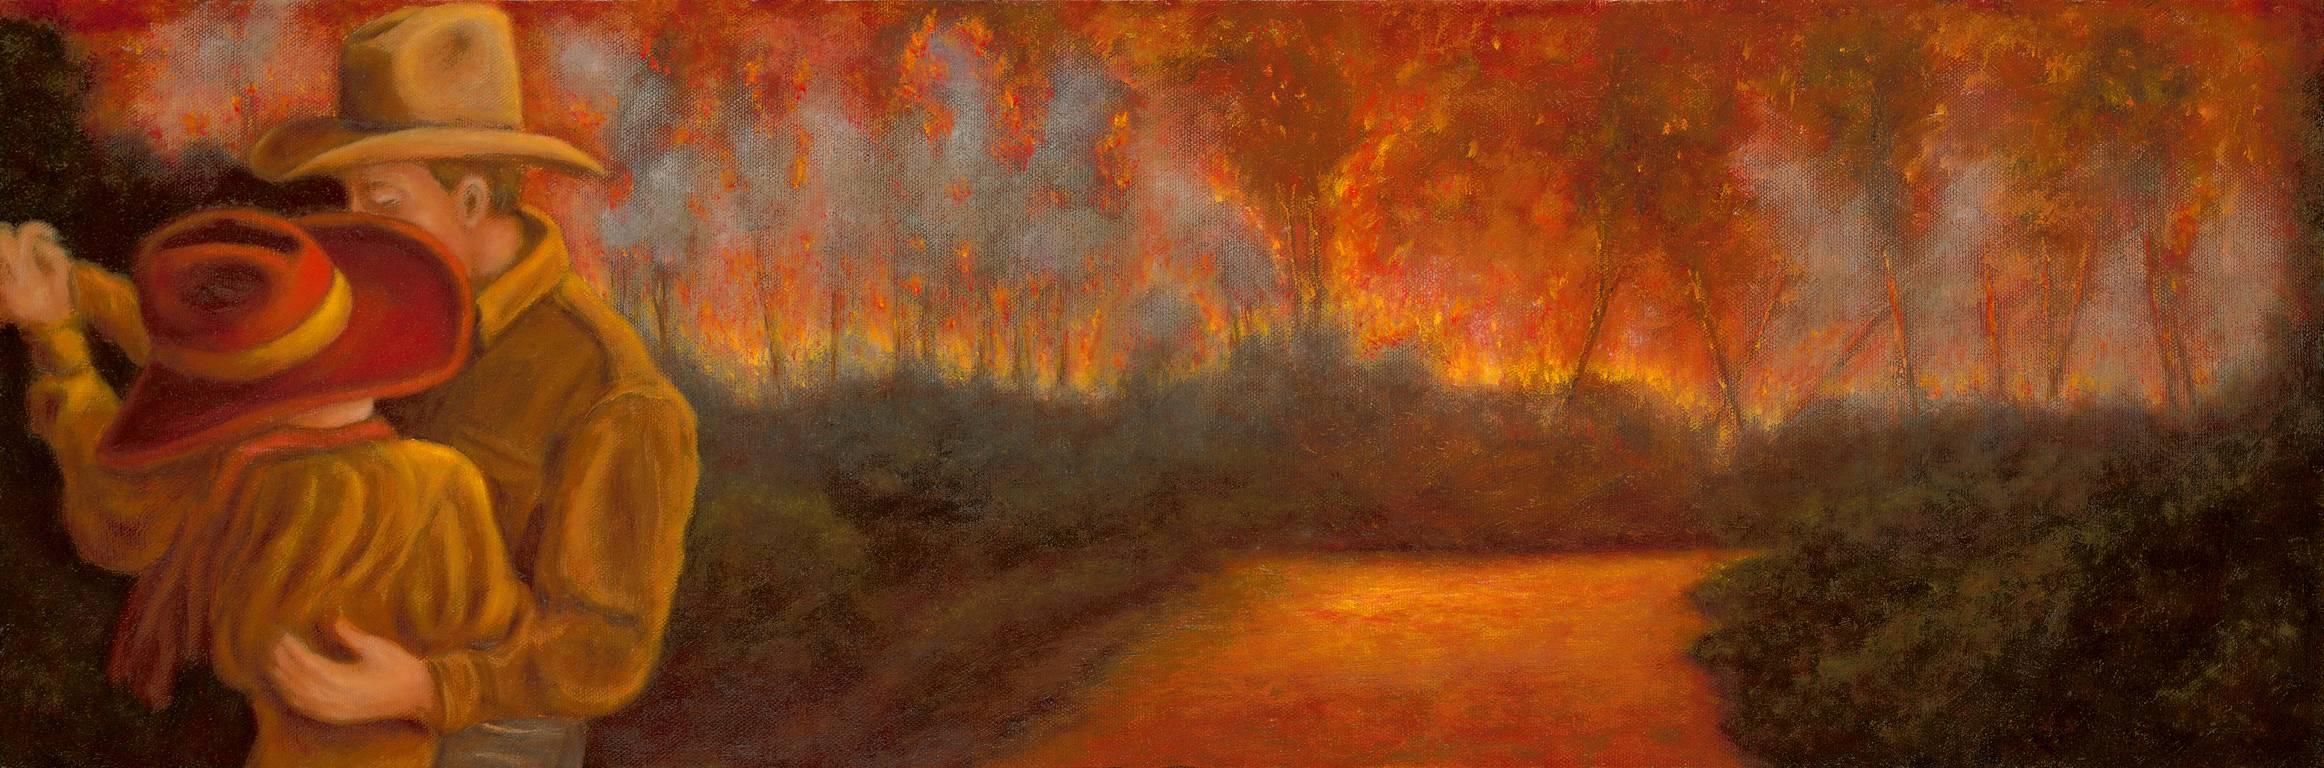 Gary Masline Landscape Painting - Oil Painting on Canvas  --  Fire Break Dance